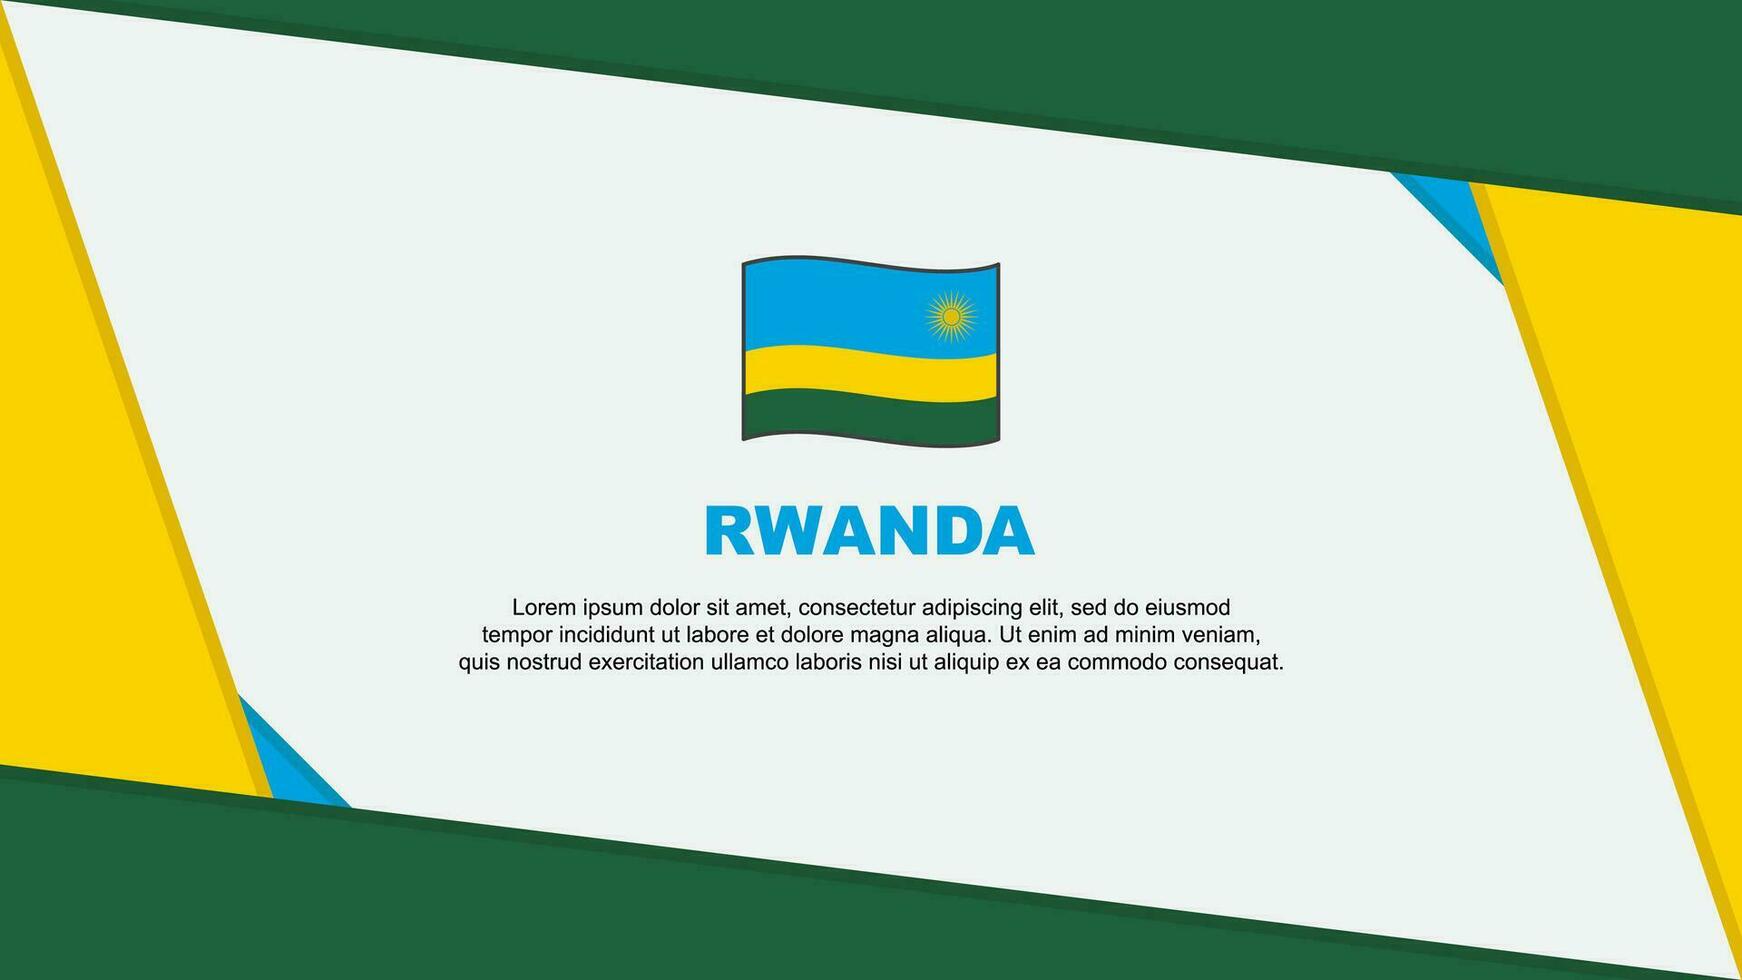 Rwanda Flag Abstract Background Design Template. Rwanda Independence Day Banner Cartoon Vector Illustration. Rwanda Independence Day